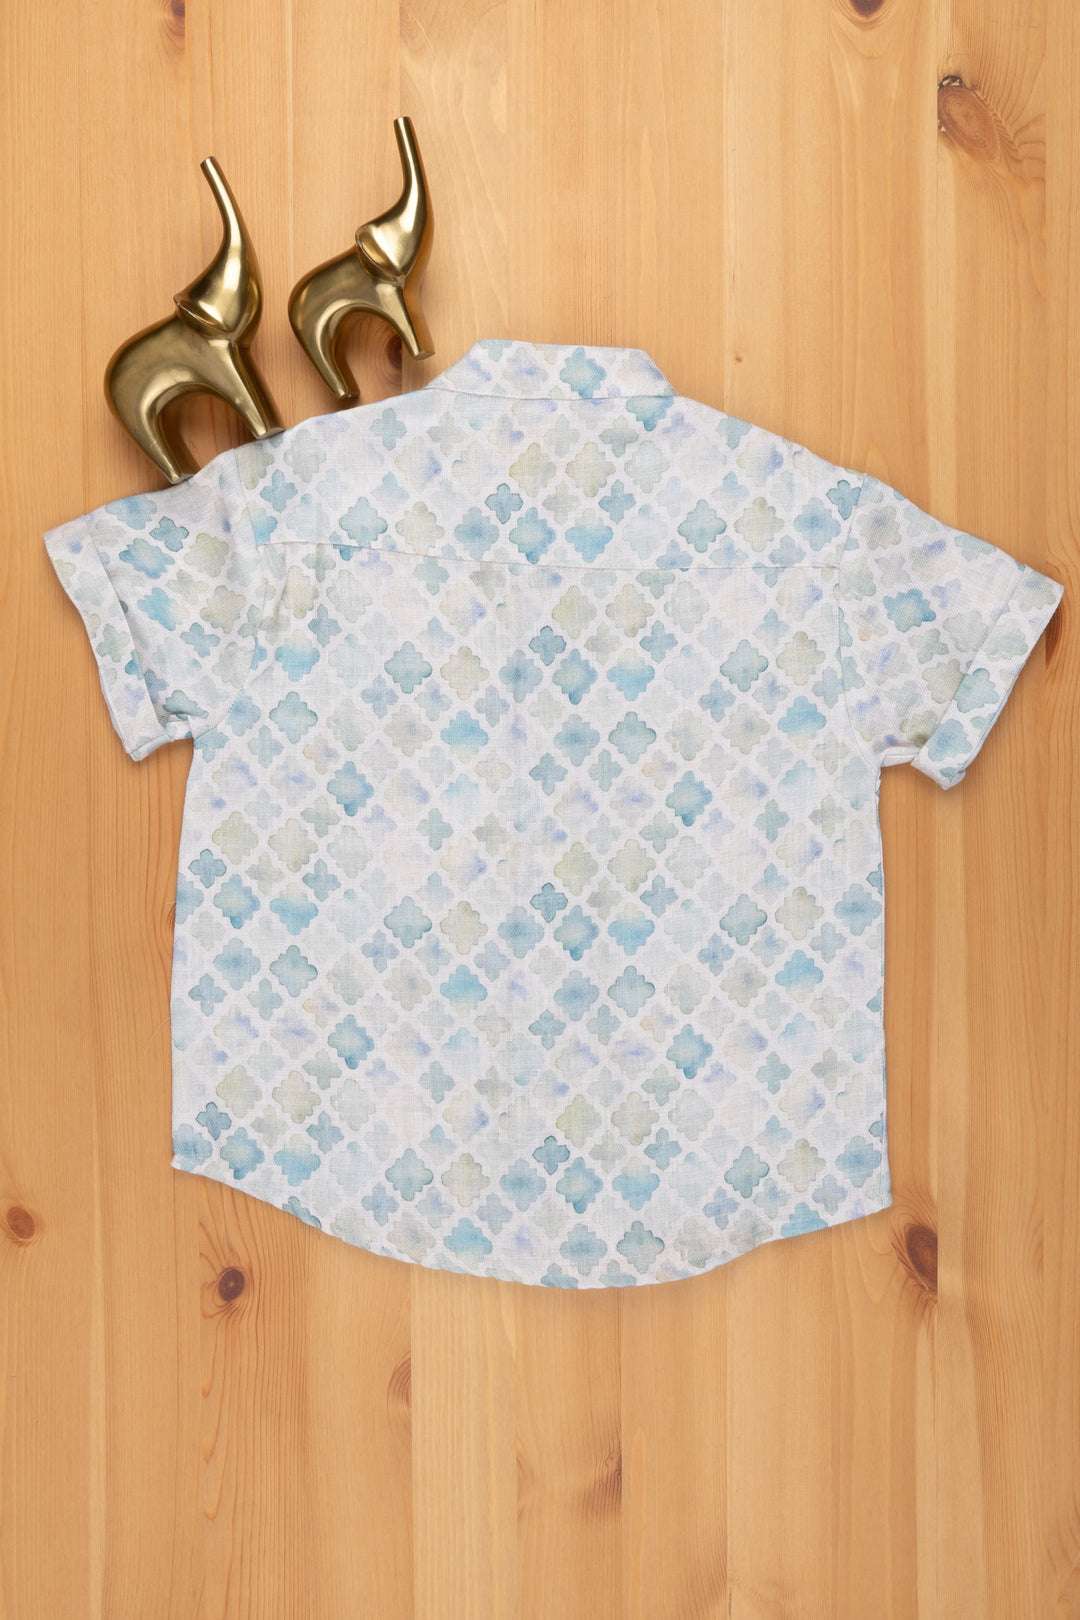 The Nesavu Boys Linen Shirt Linen Boys' Shirt with Geometric Prints for a Modern and Artistic Twist Nesavu Geometric Printed Linen Shirt | Baby Boys Casual Shirt | The Nesavu